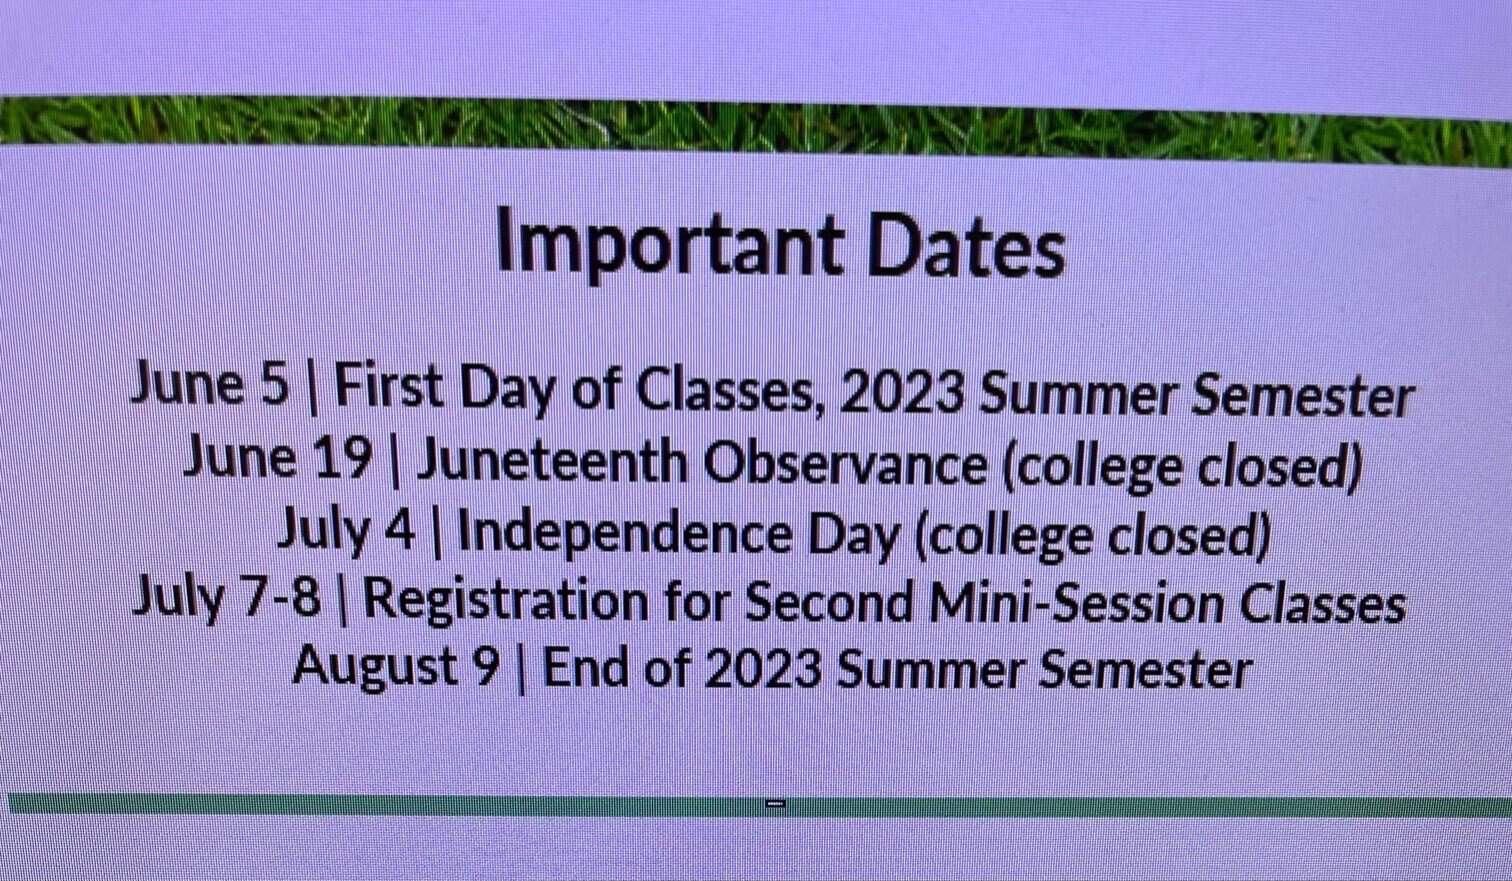 WCCS important dates